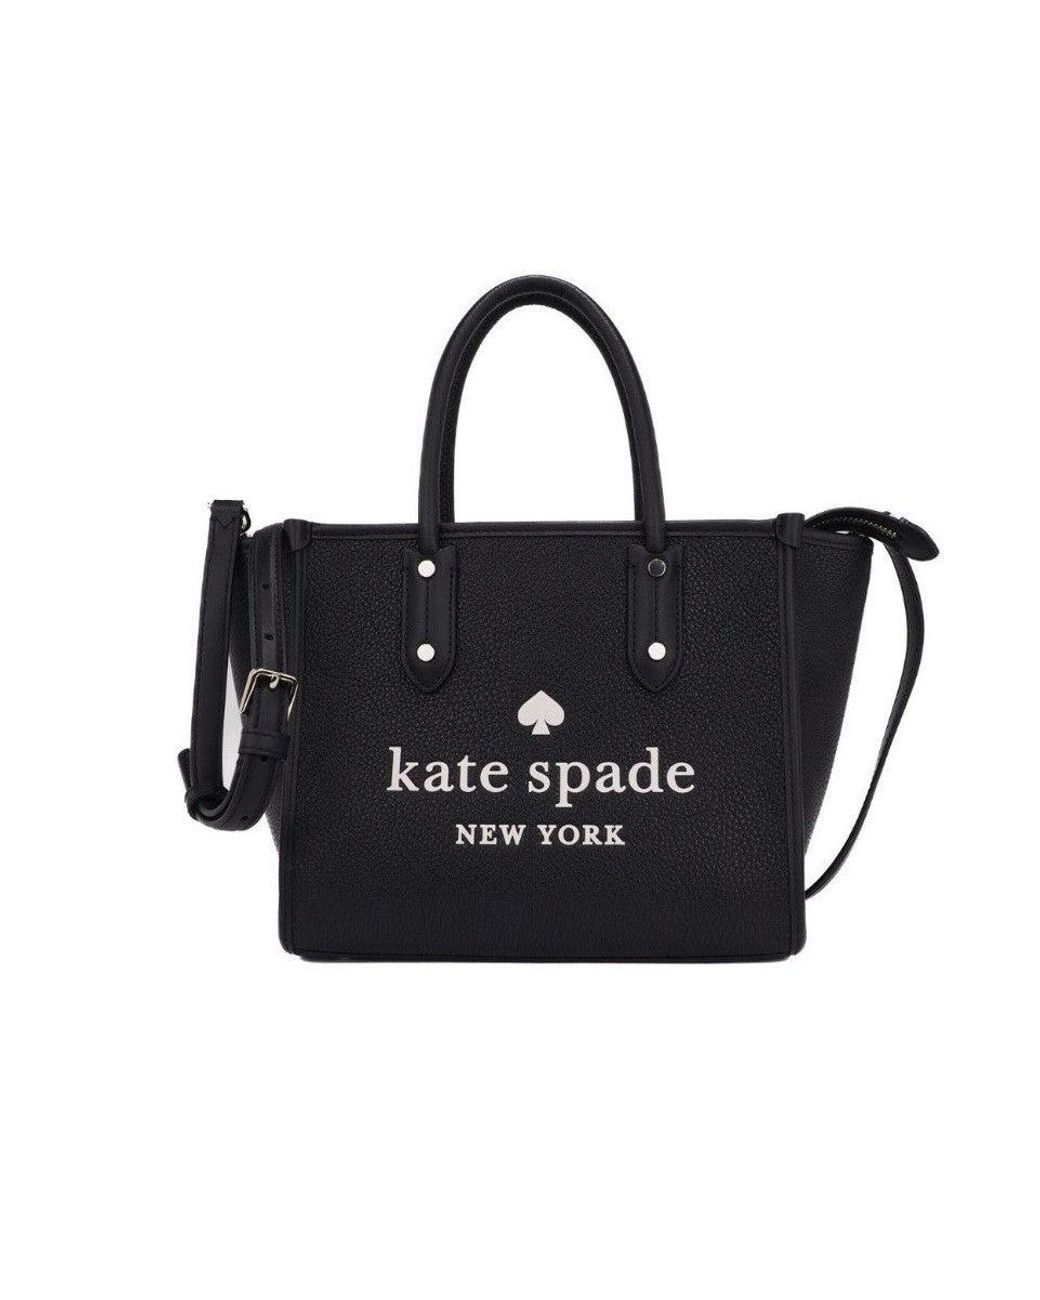 kate spade | Bags | Kate Spade Leila Small Bucket Bagcolorblack Nwt |  Poshmark